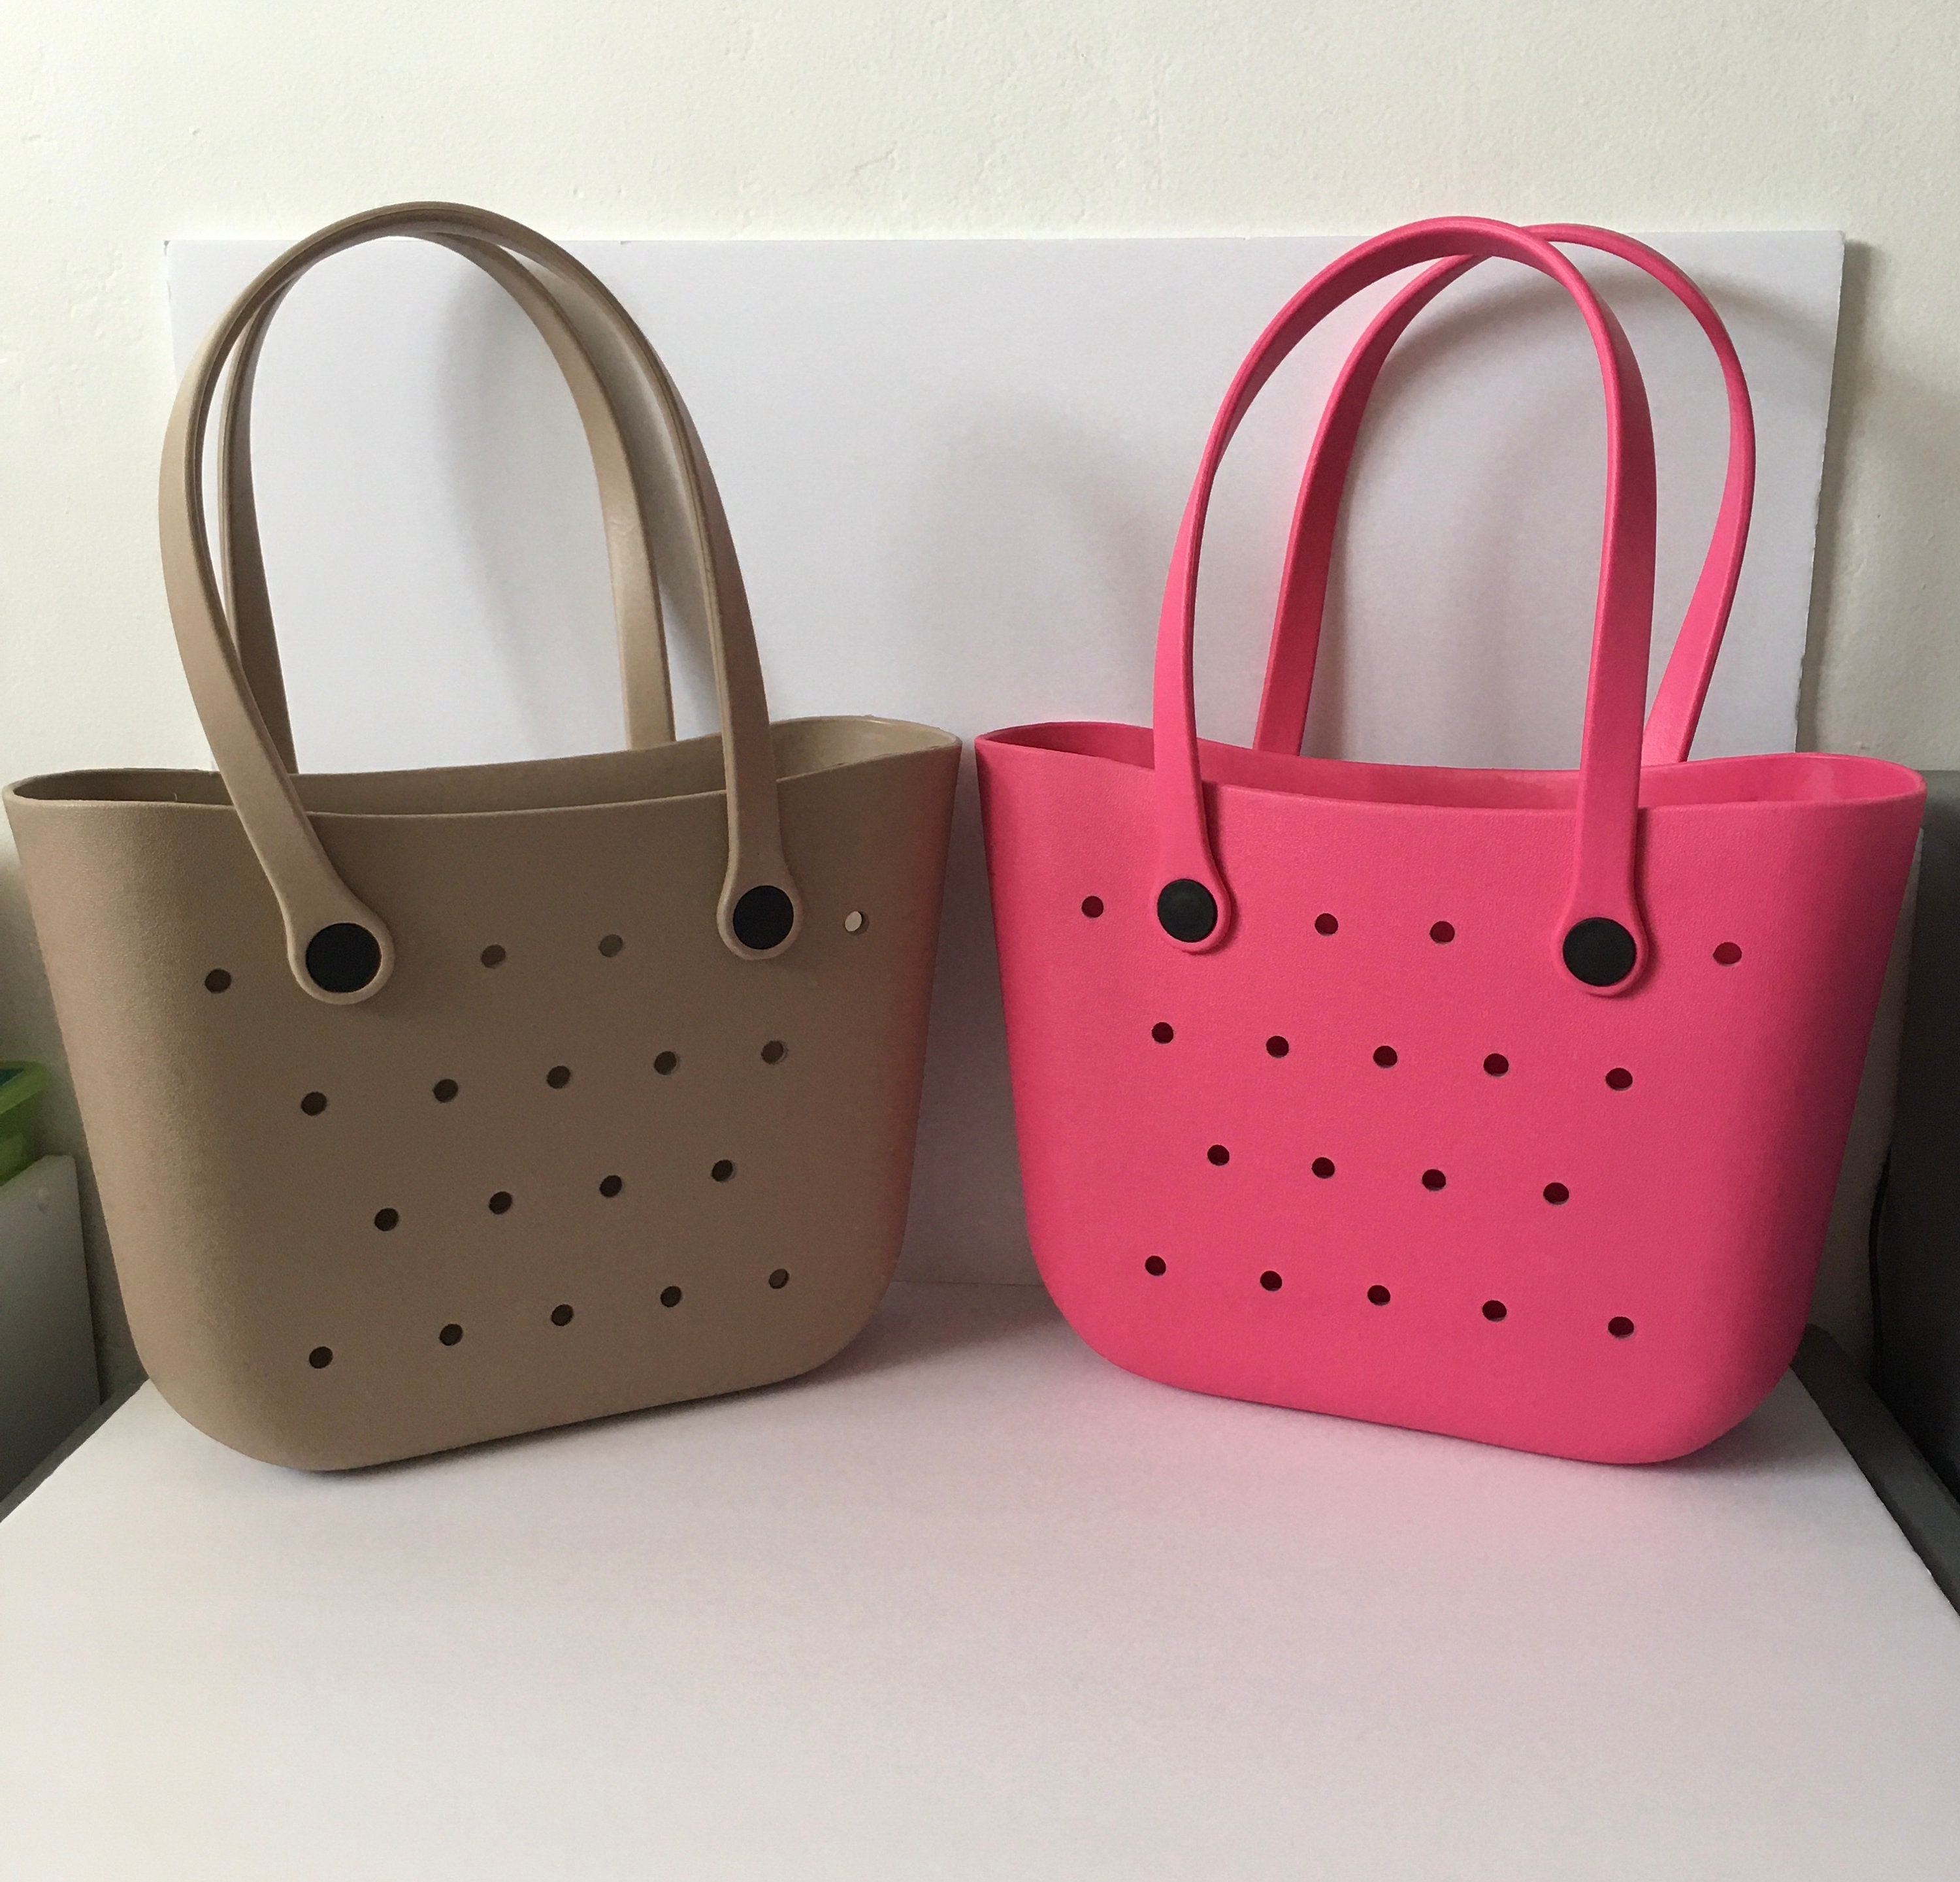 Bogg Bag Acrylic Tags – Pink Poodle Designz